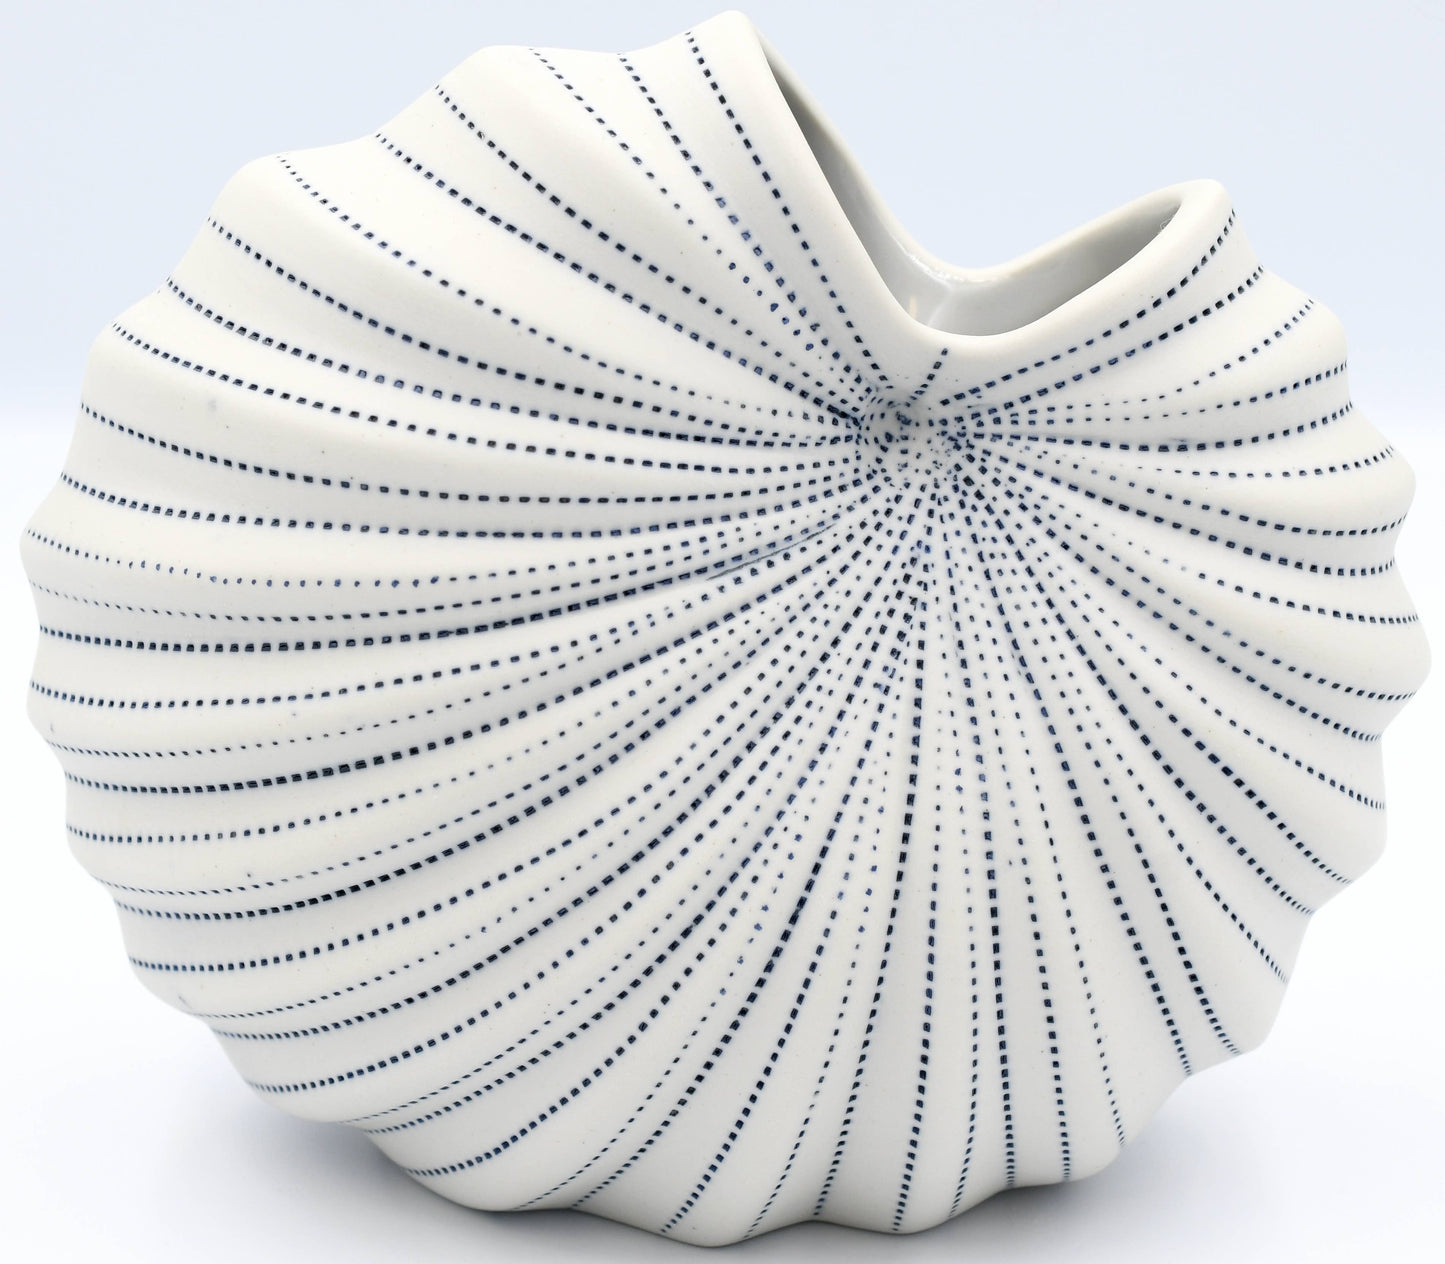 1280W26 PALM S - WO 26 Porcelain bud vase